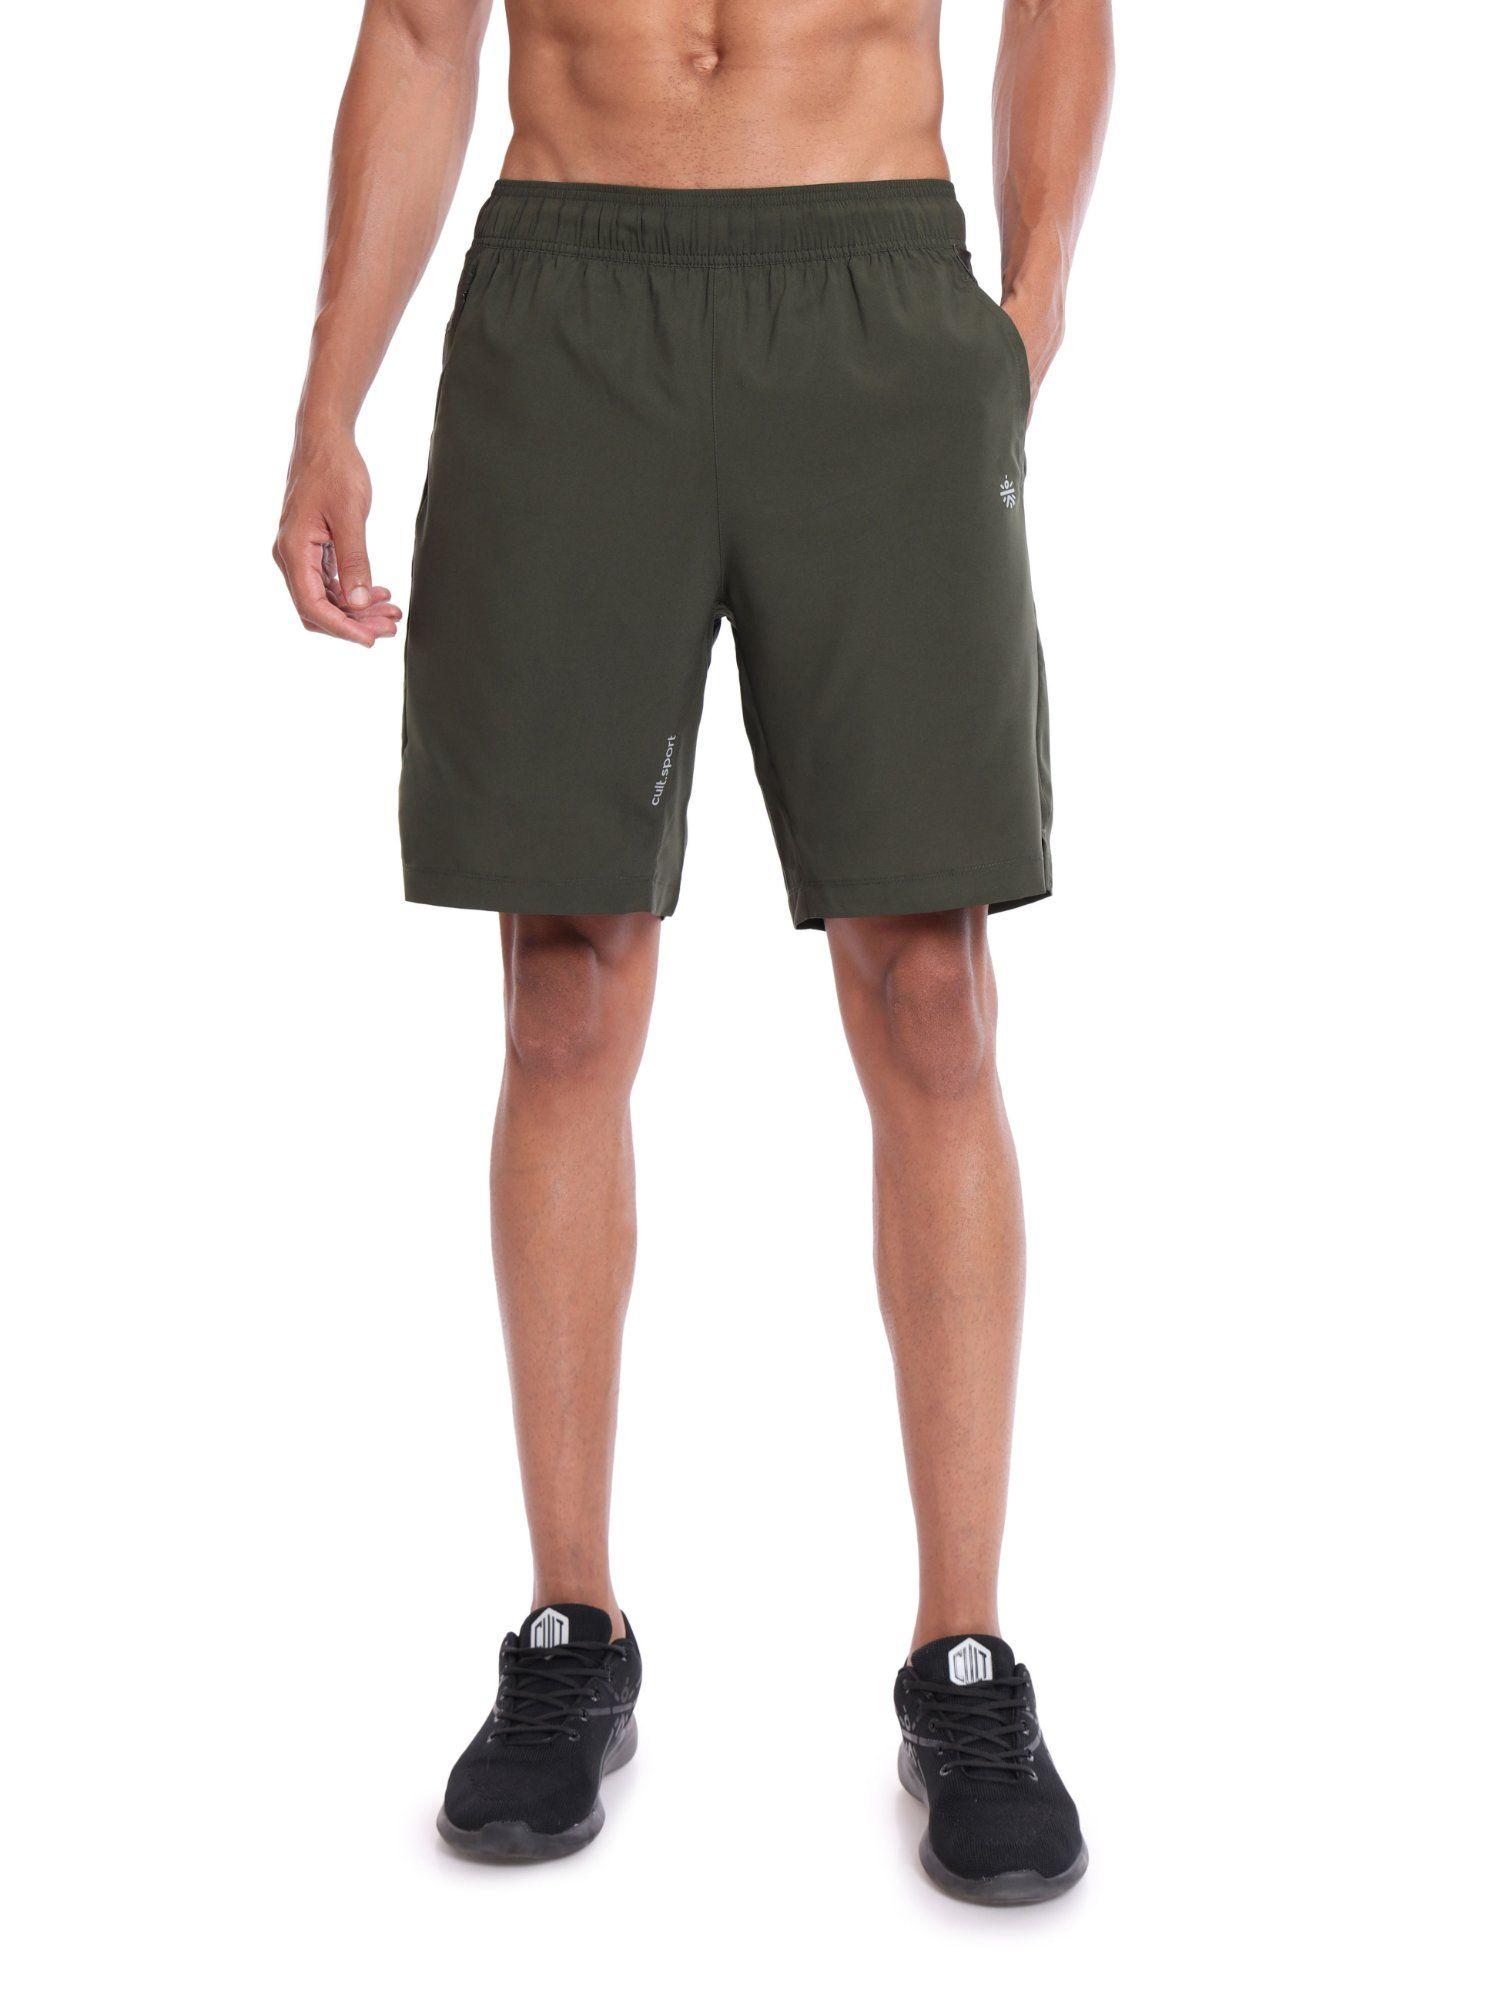 panelled-running-shorts